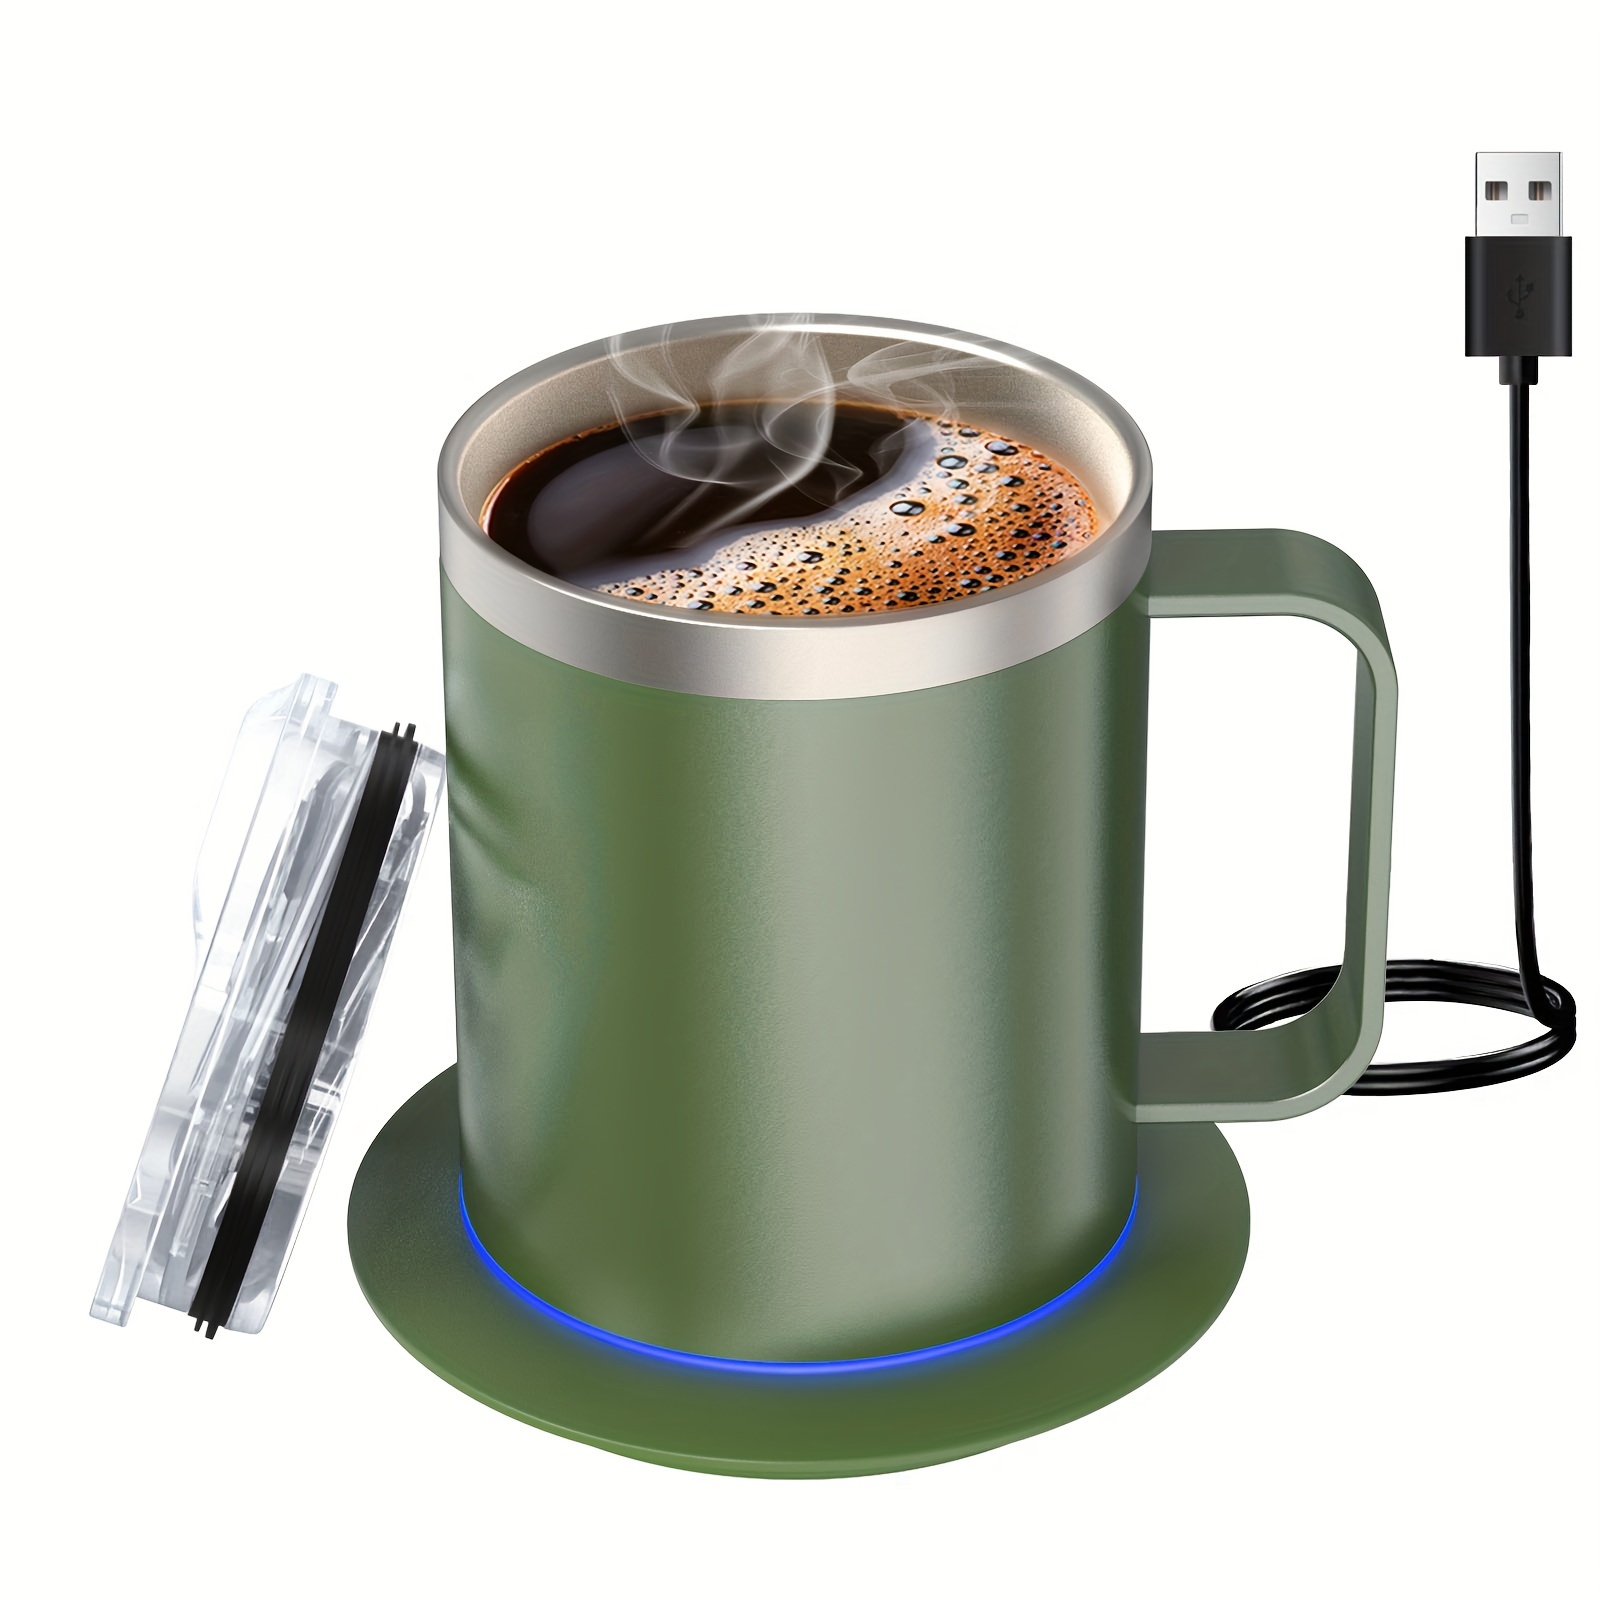 Set of Coffee warmer & SS Mug with Lid